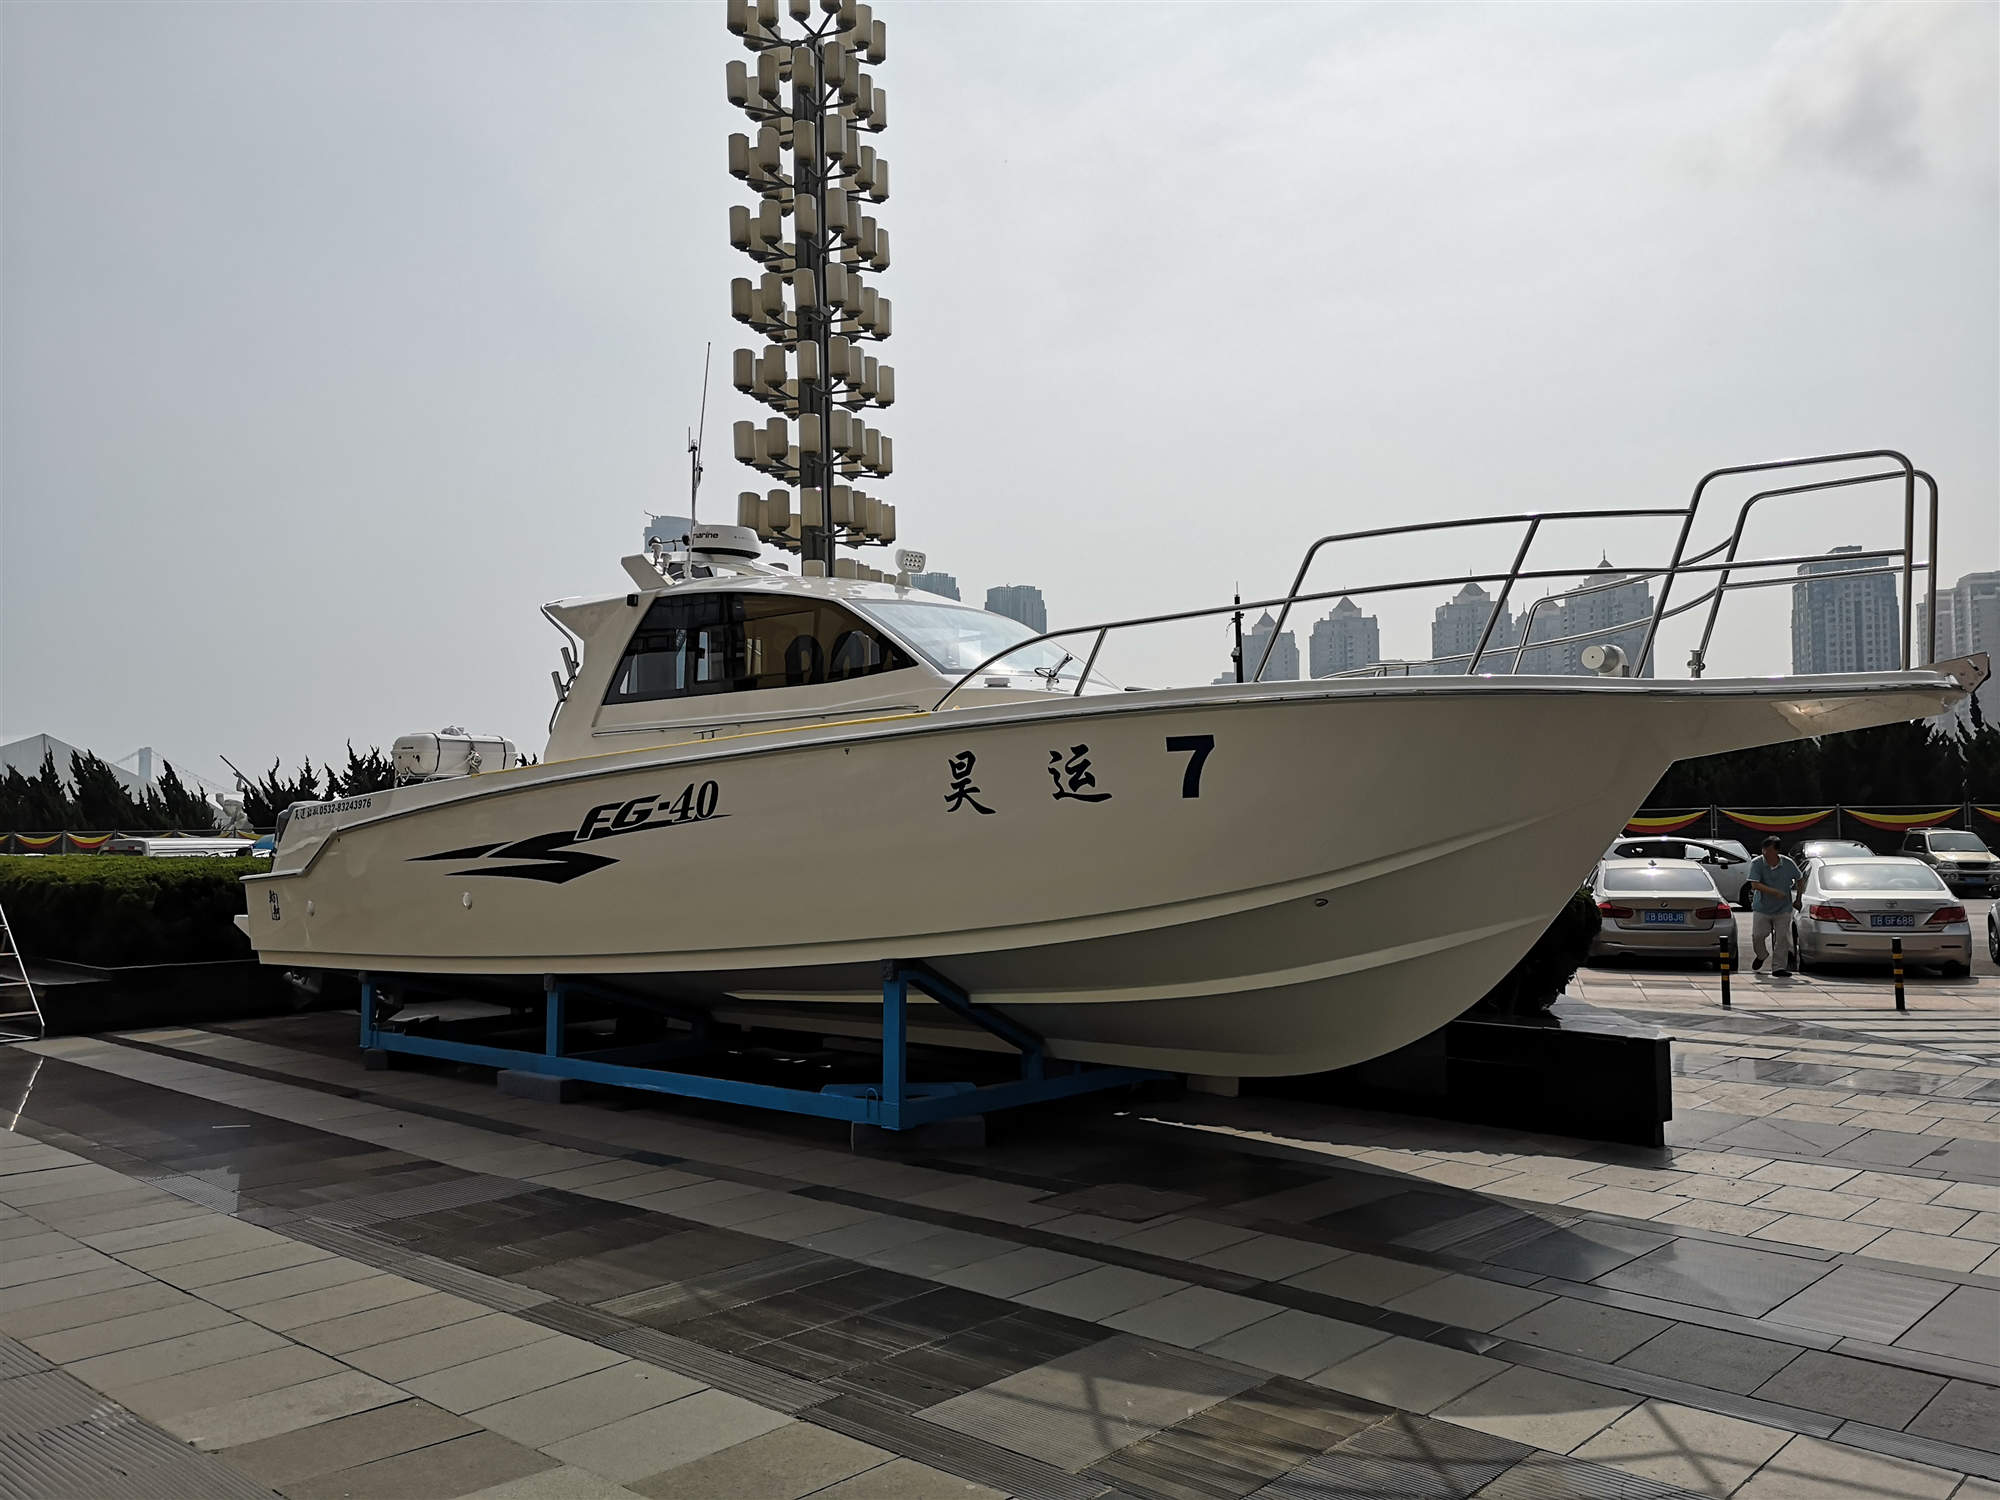 Grandsea 40ft /12m Outboard Fiberglass Cabin Japanese Model Fishing Boat for Sale